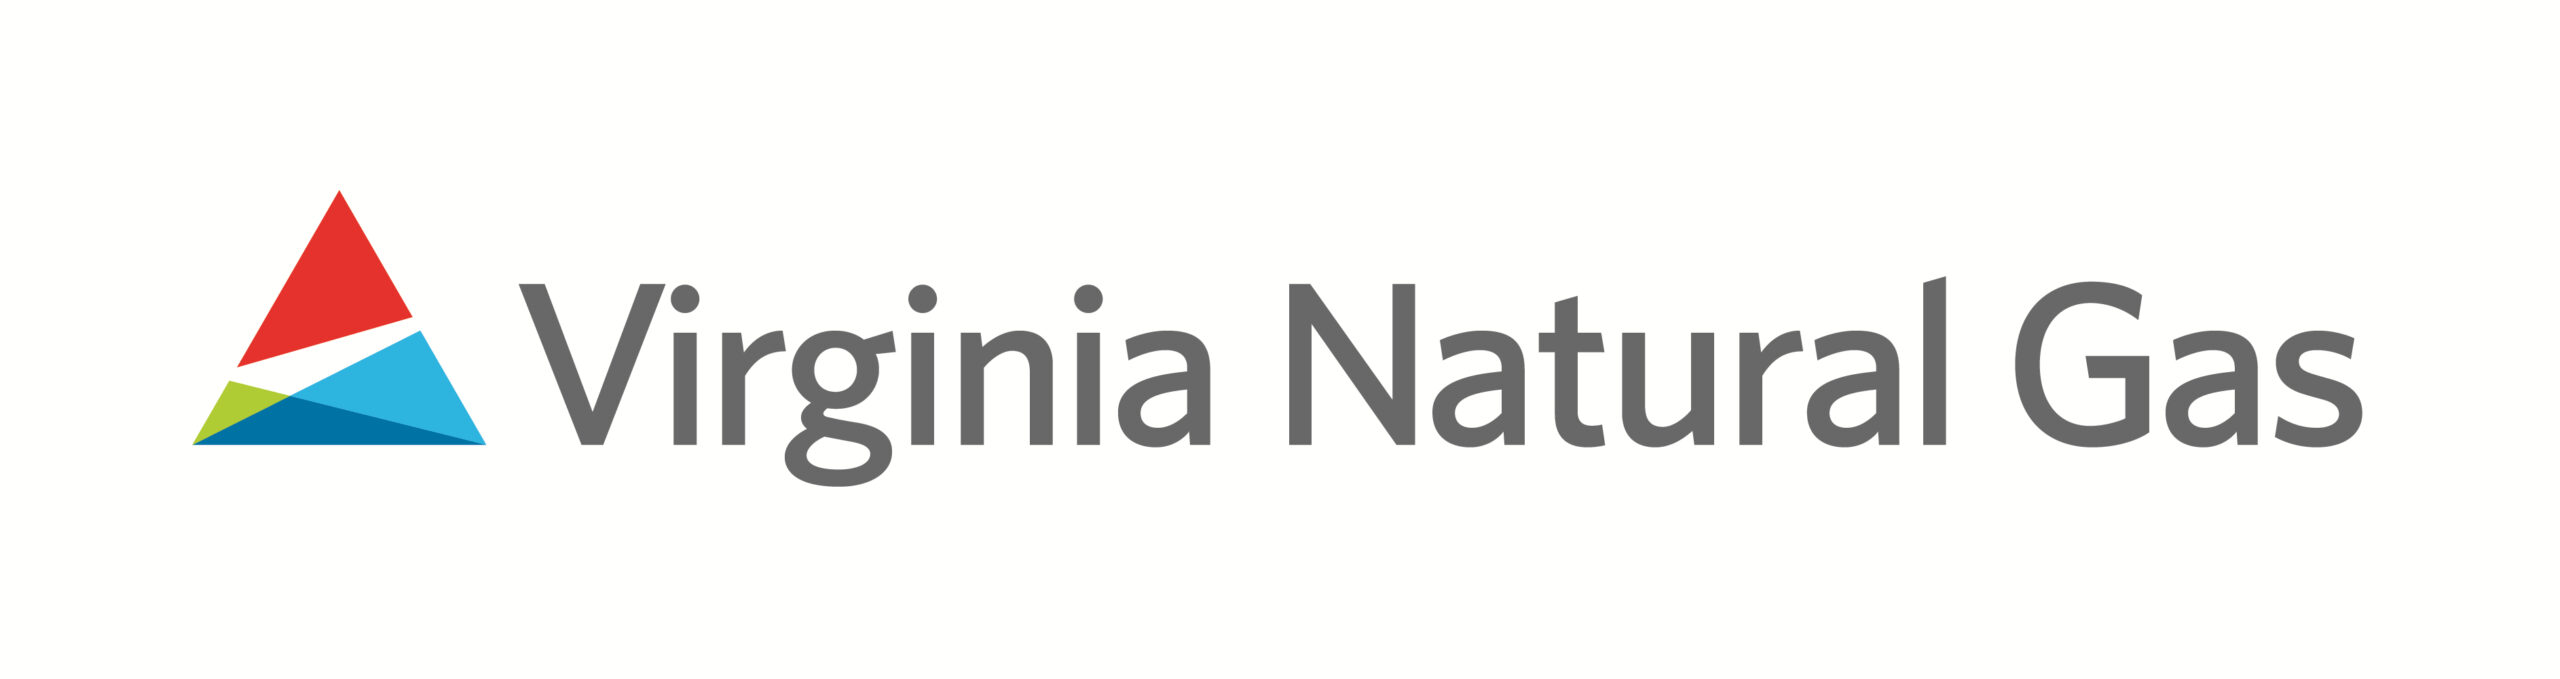 Virginia Natural Gas Profile